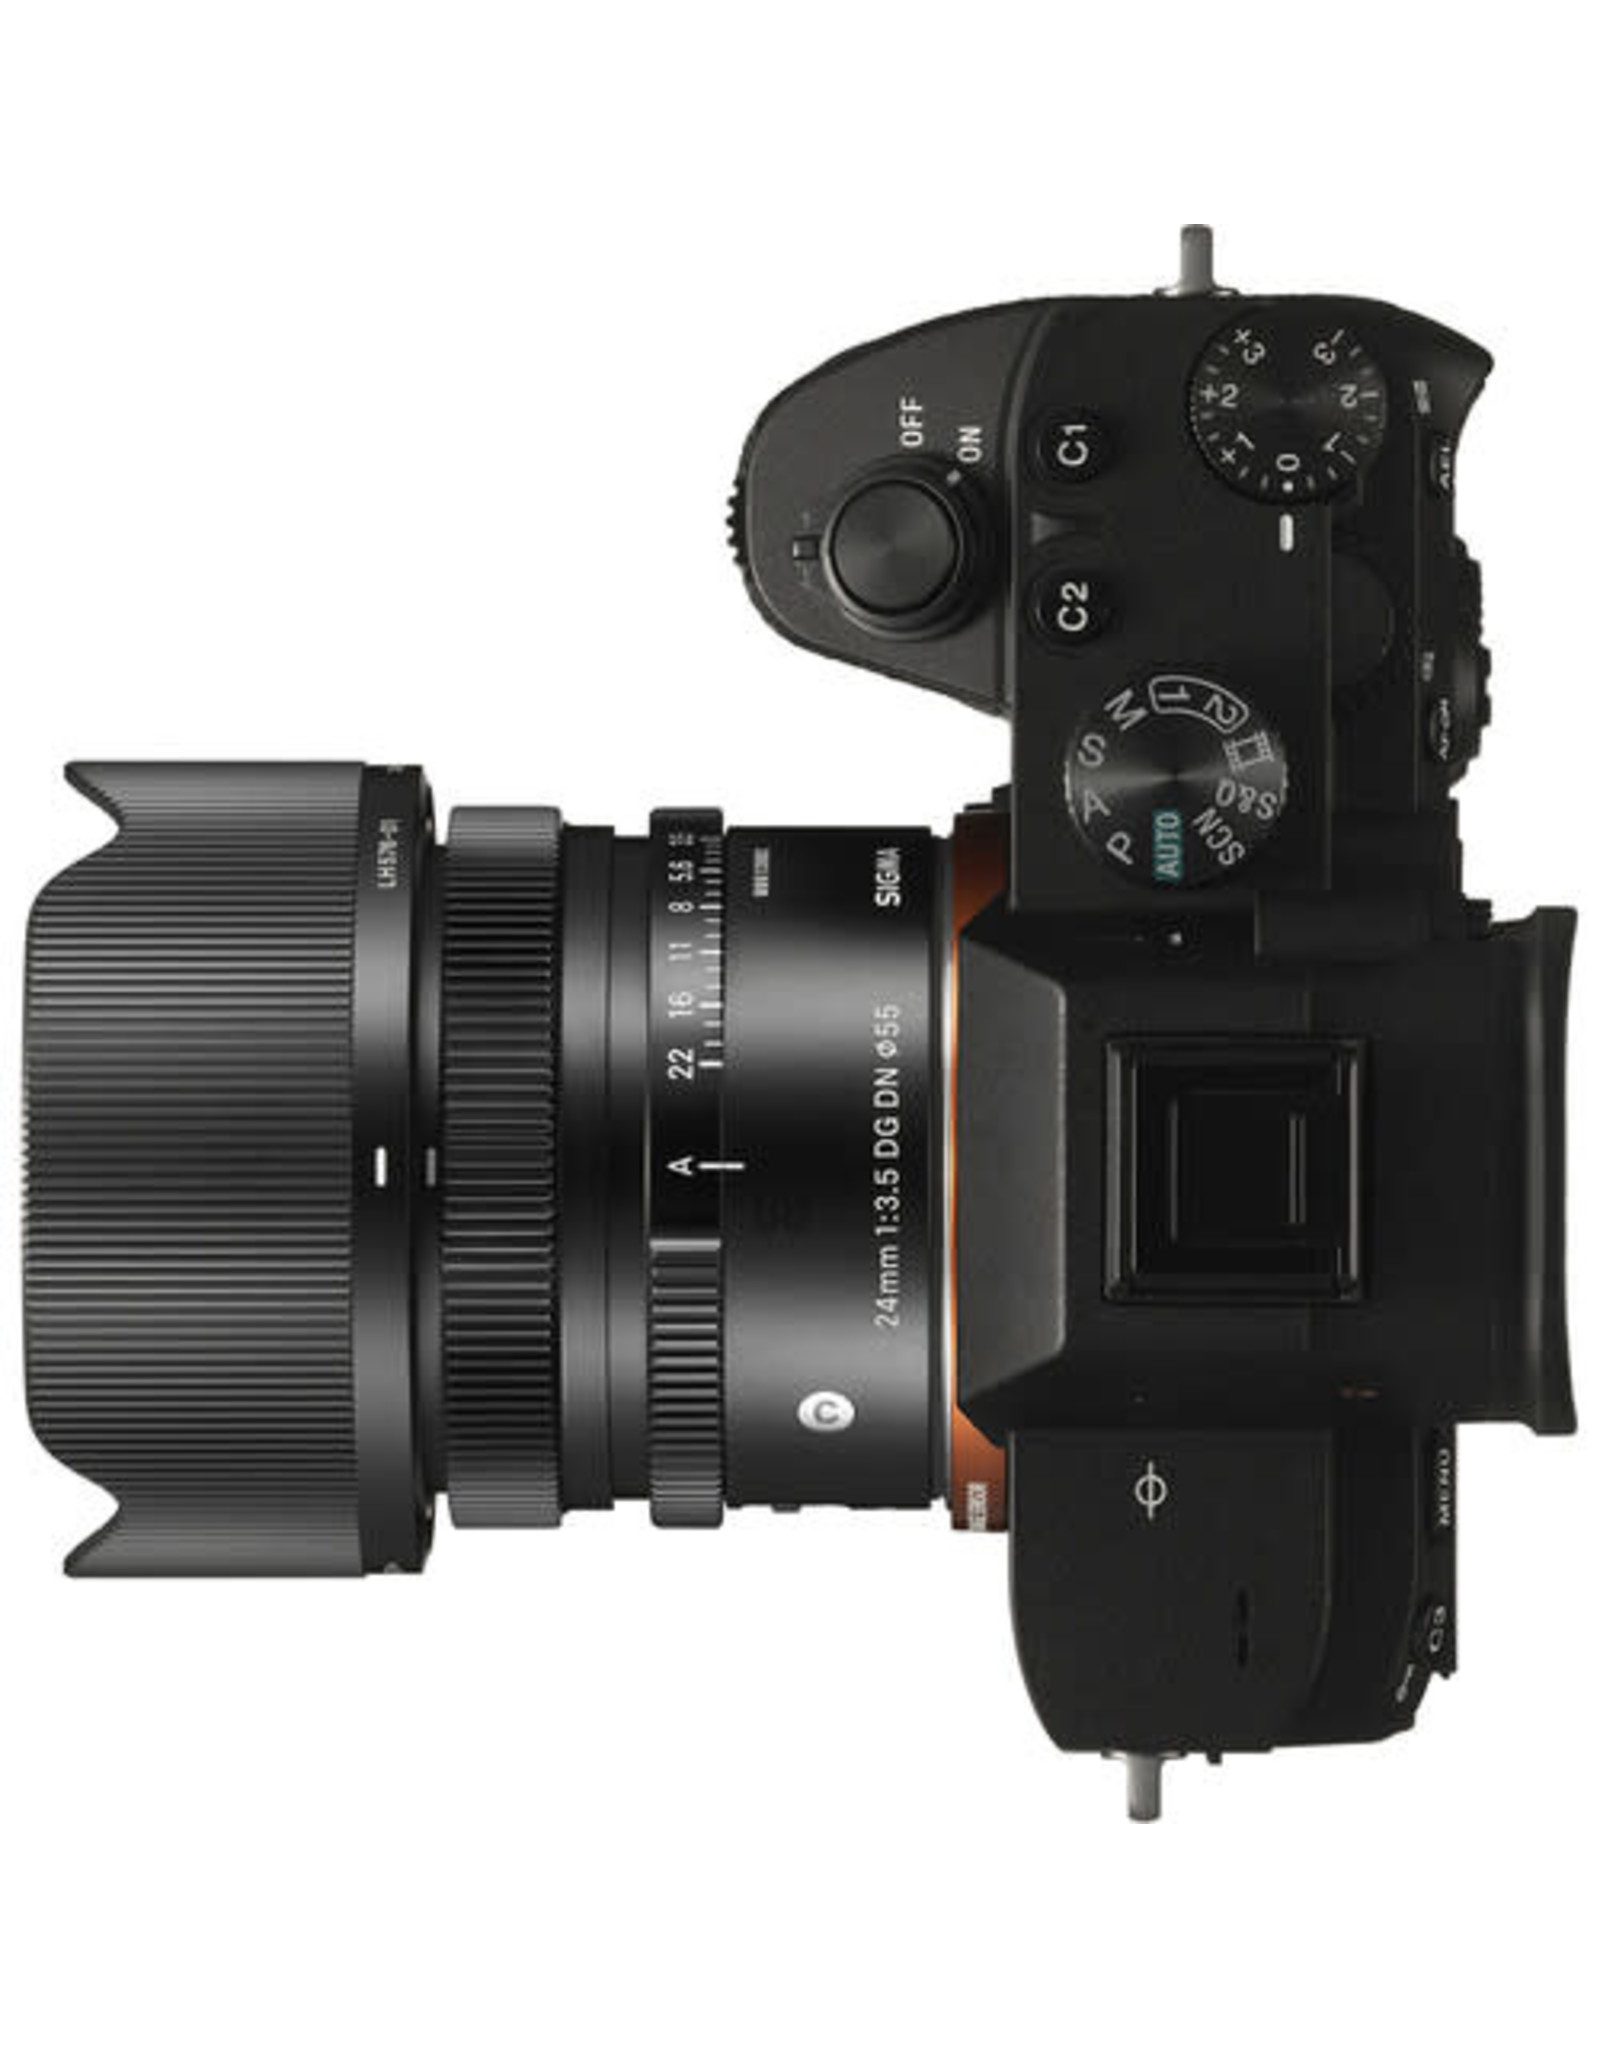 Sigma Sigma 24mm f/3.5 DG DN Contemporary Lens (Specify Mount)